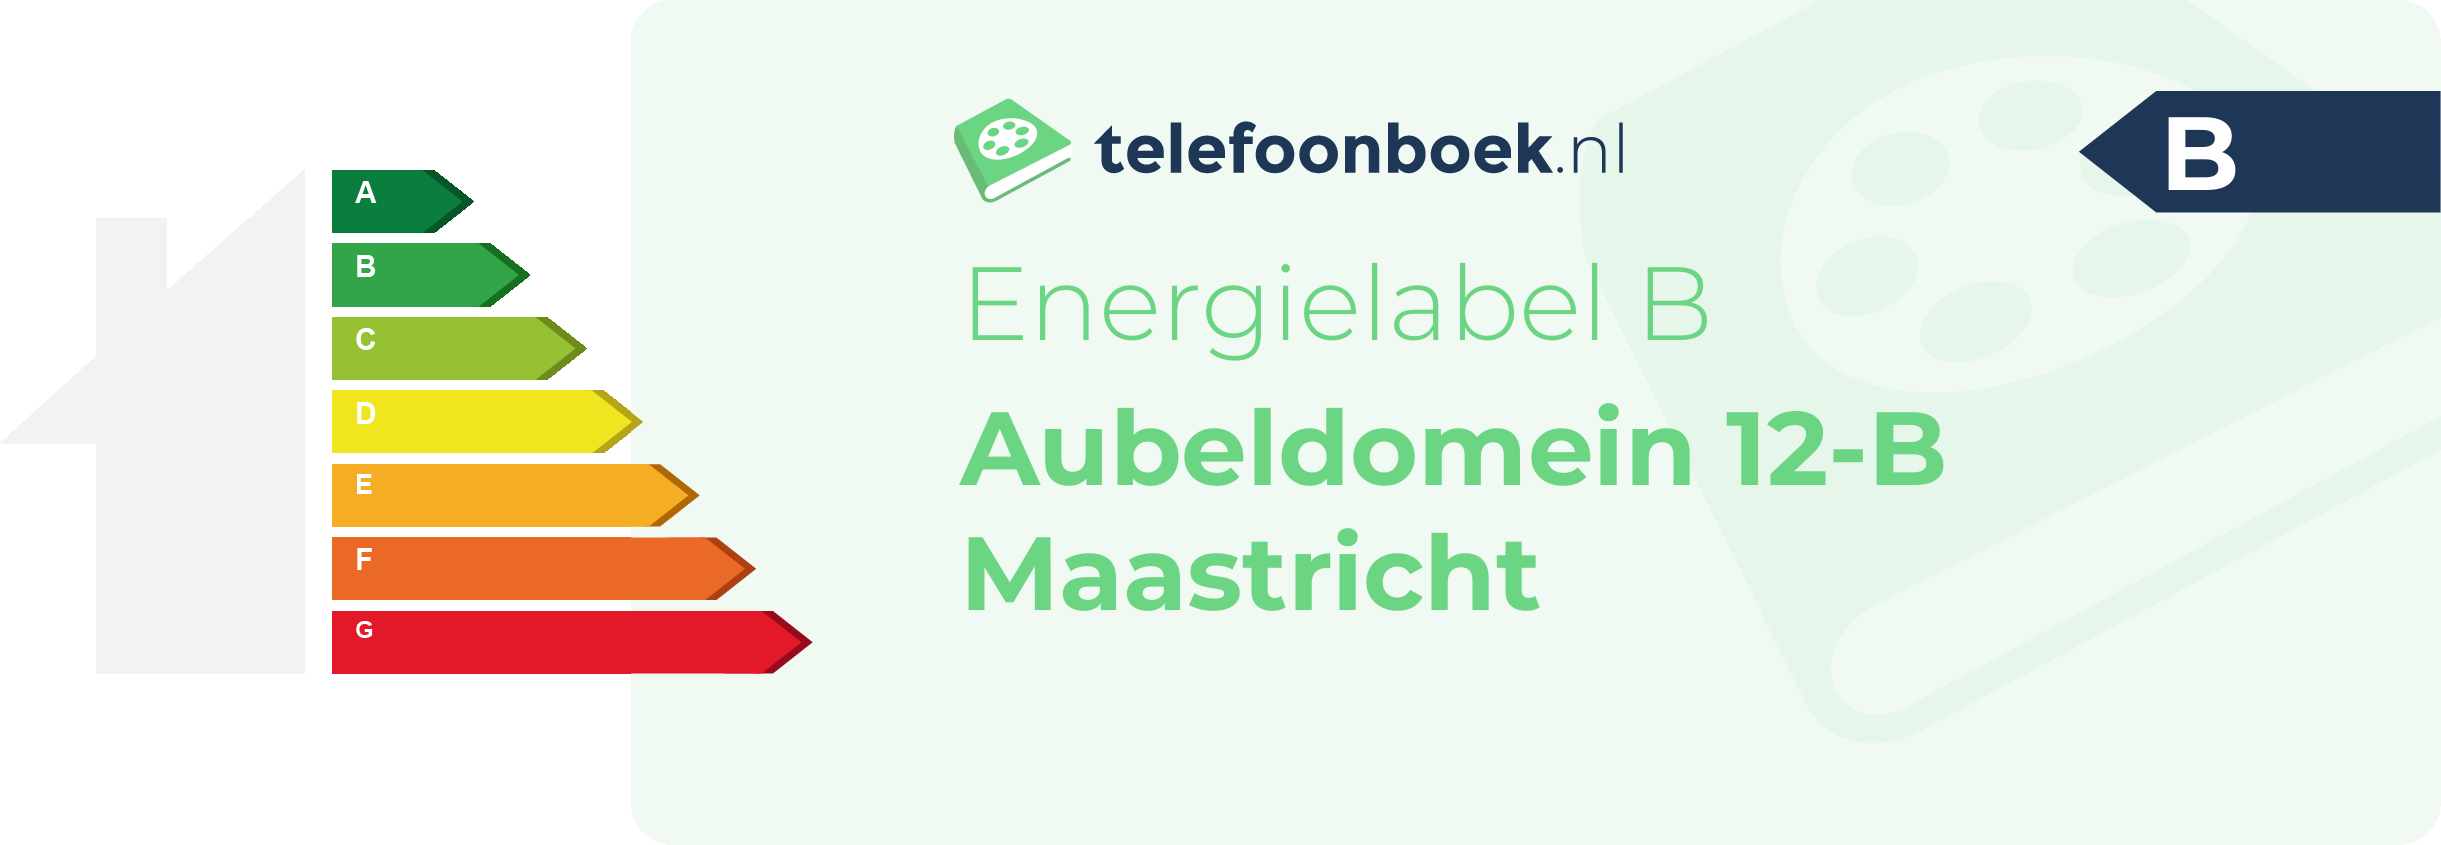 Energielabel Aubeldomein 12-B Maastricht